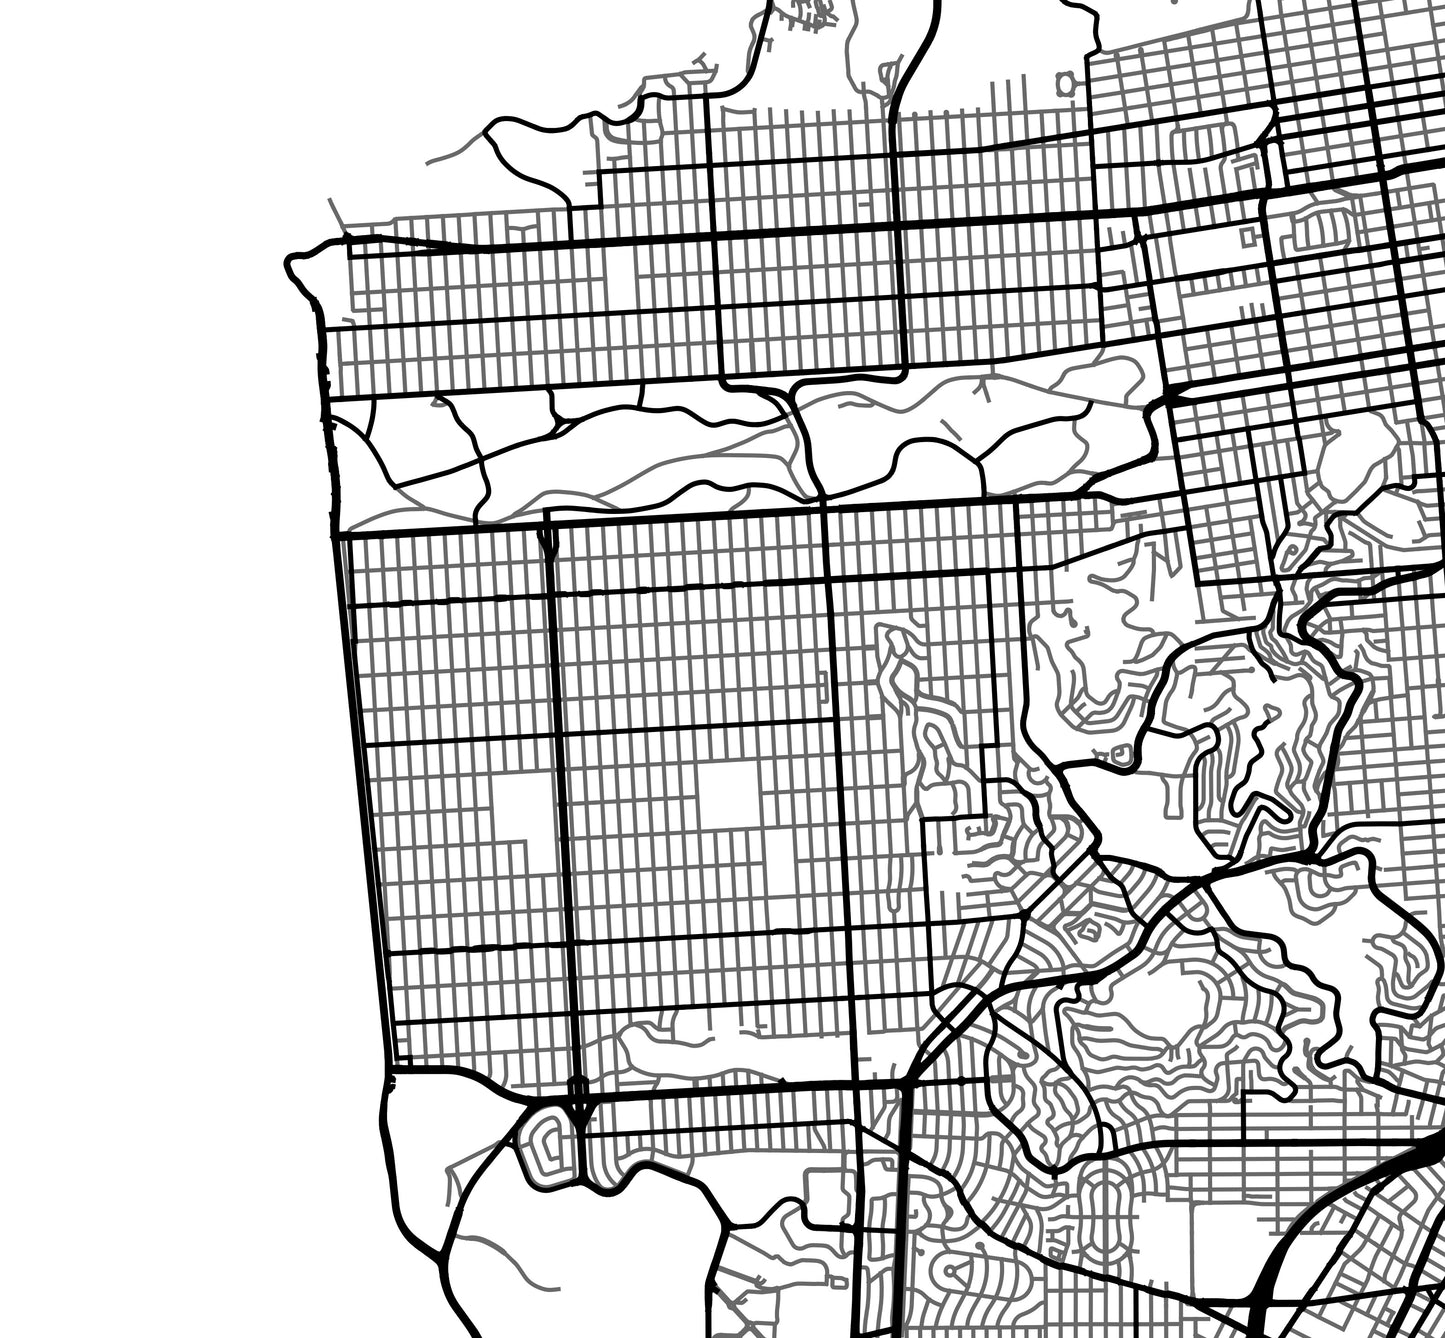 San Francisco Poster -  Wall Decor Map of City Road Network